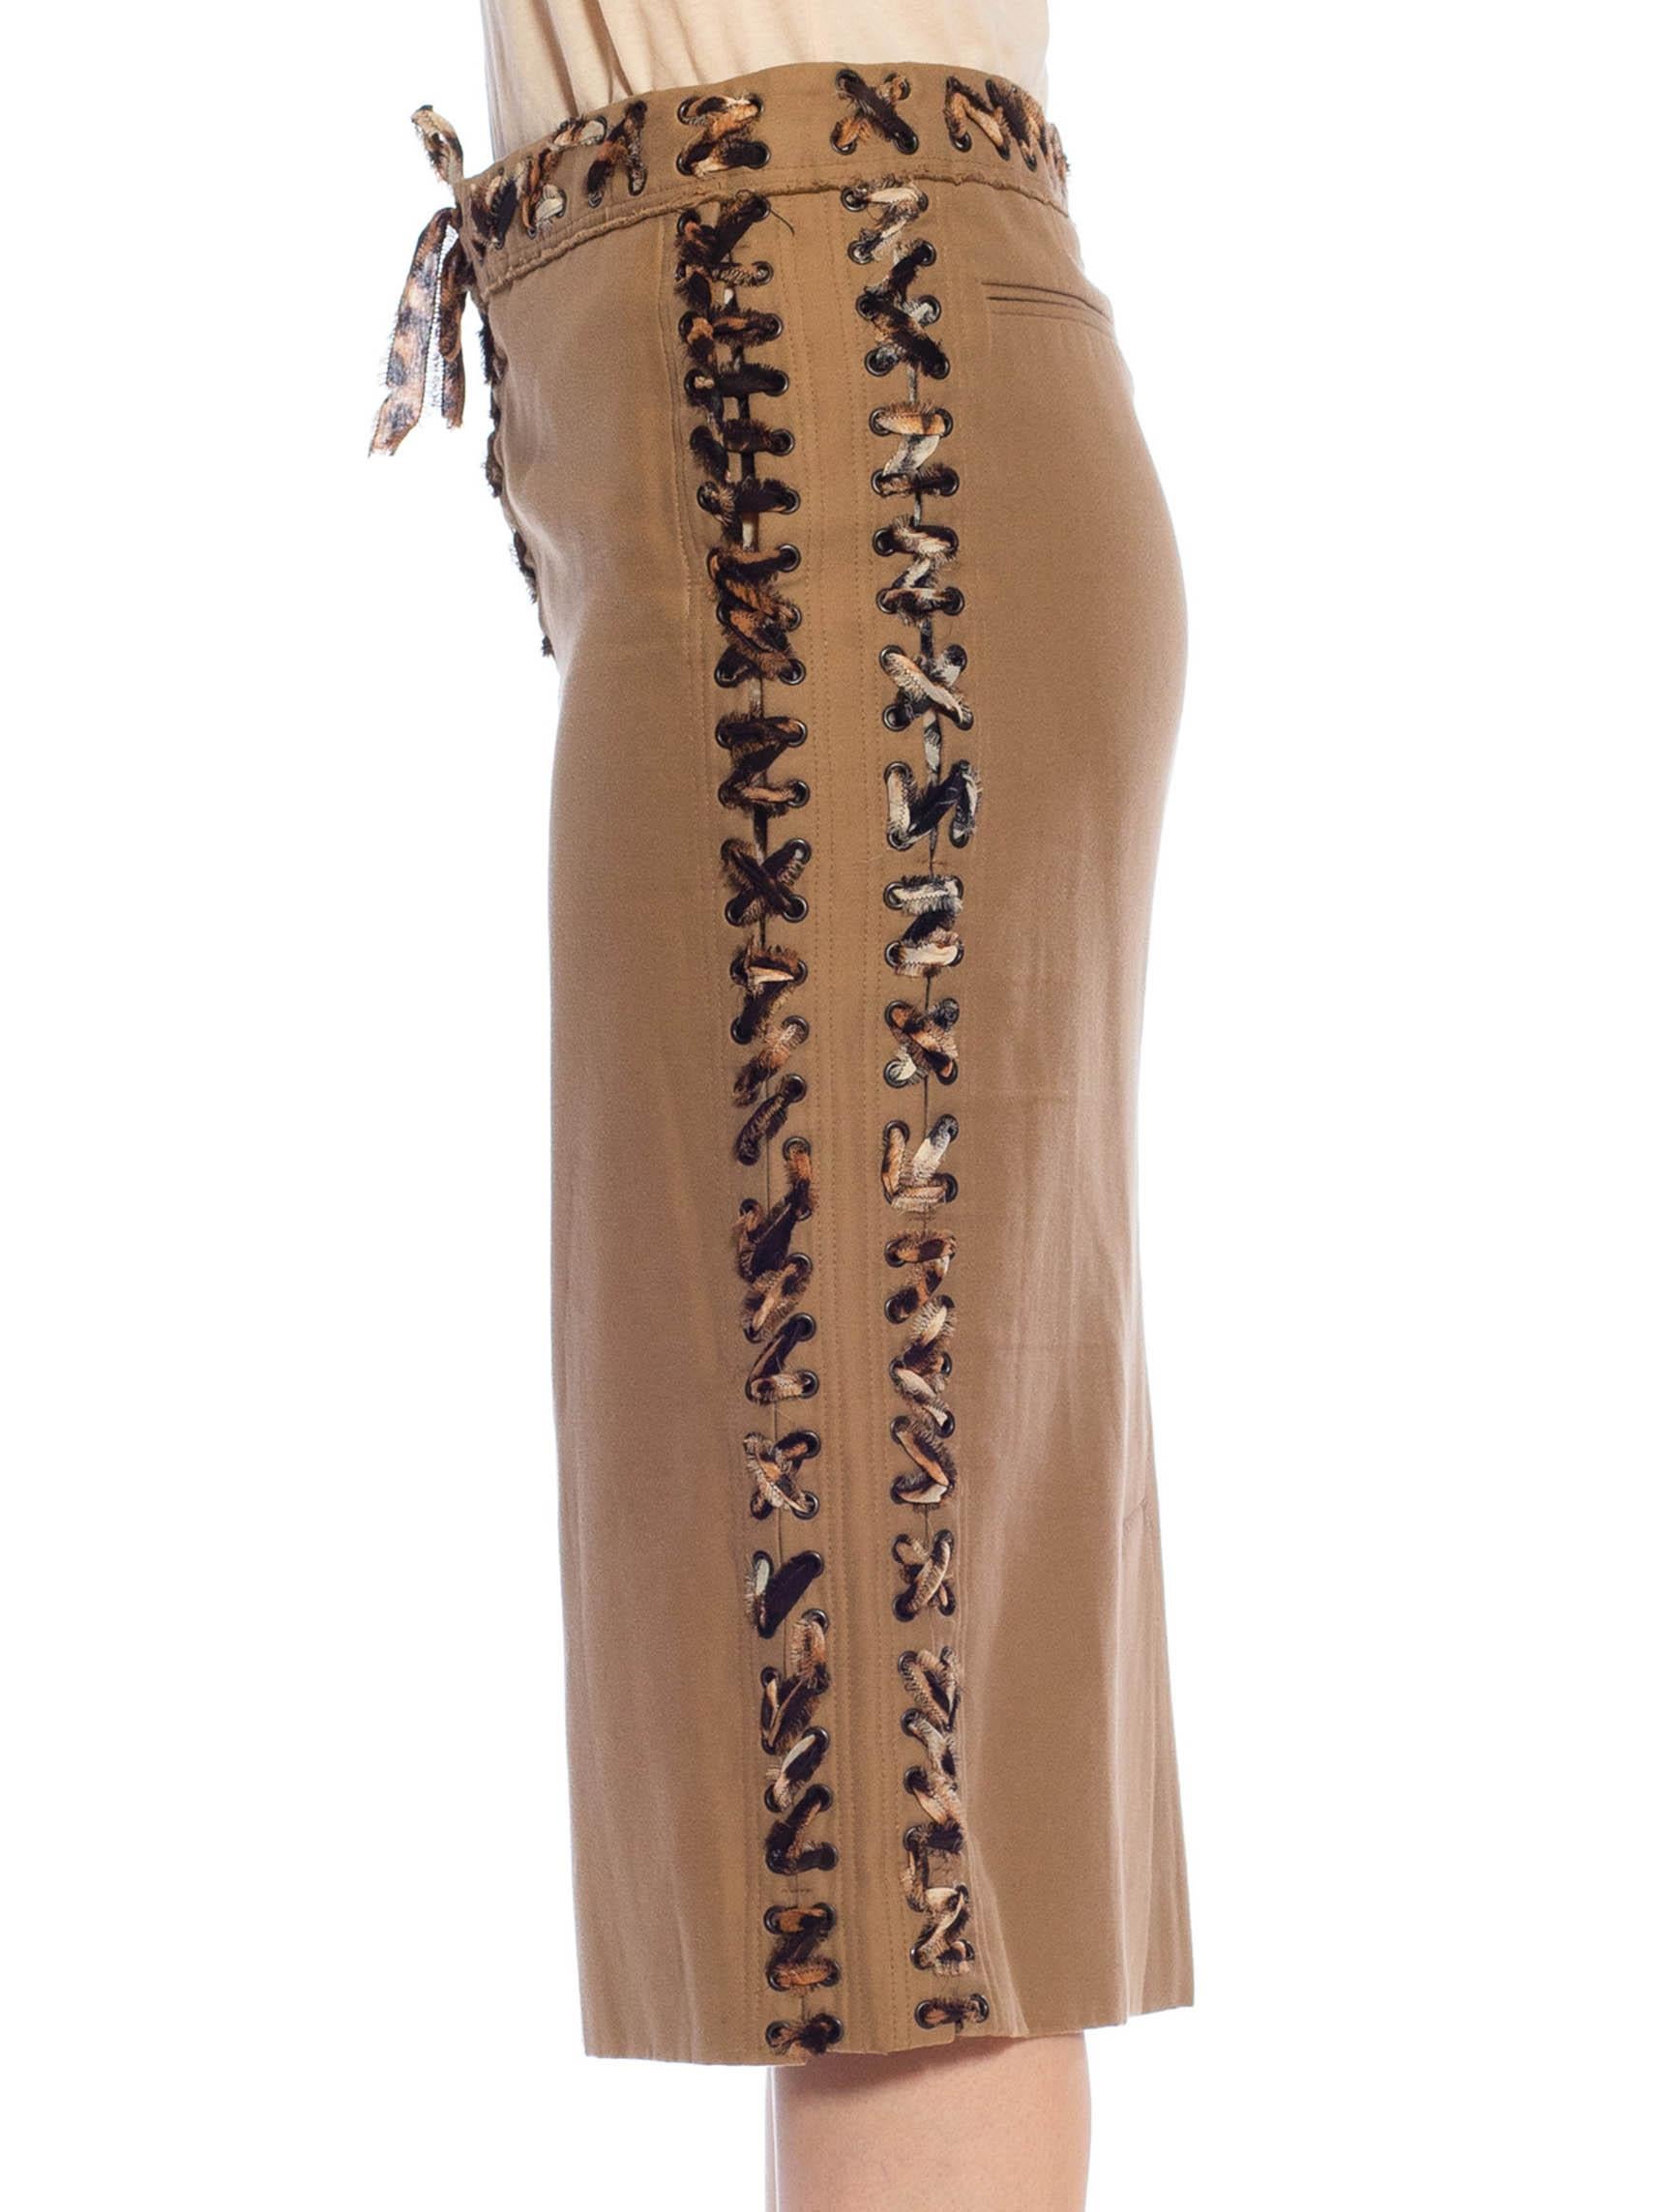 Rive Gauche 2000S YVES SAINT LAURENT Brown Cotton Tom Ford Safari Collection Skirt 